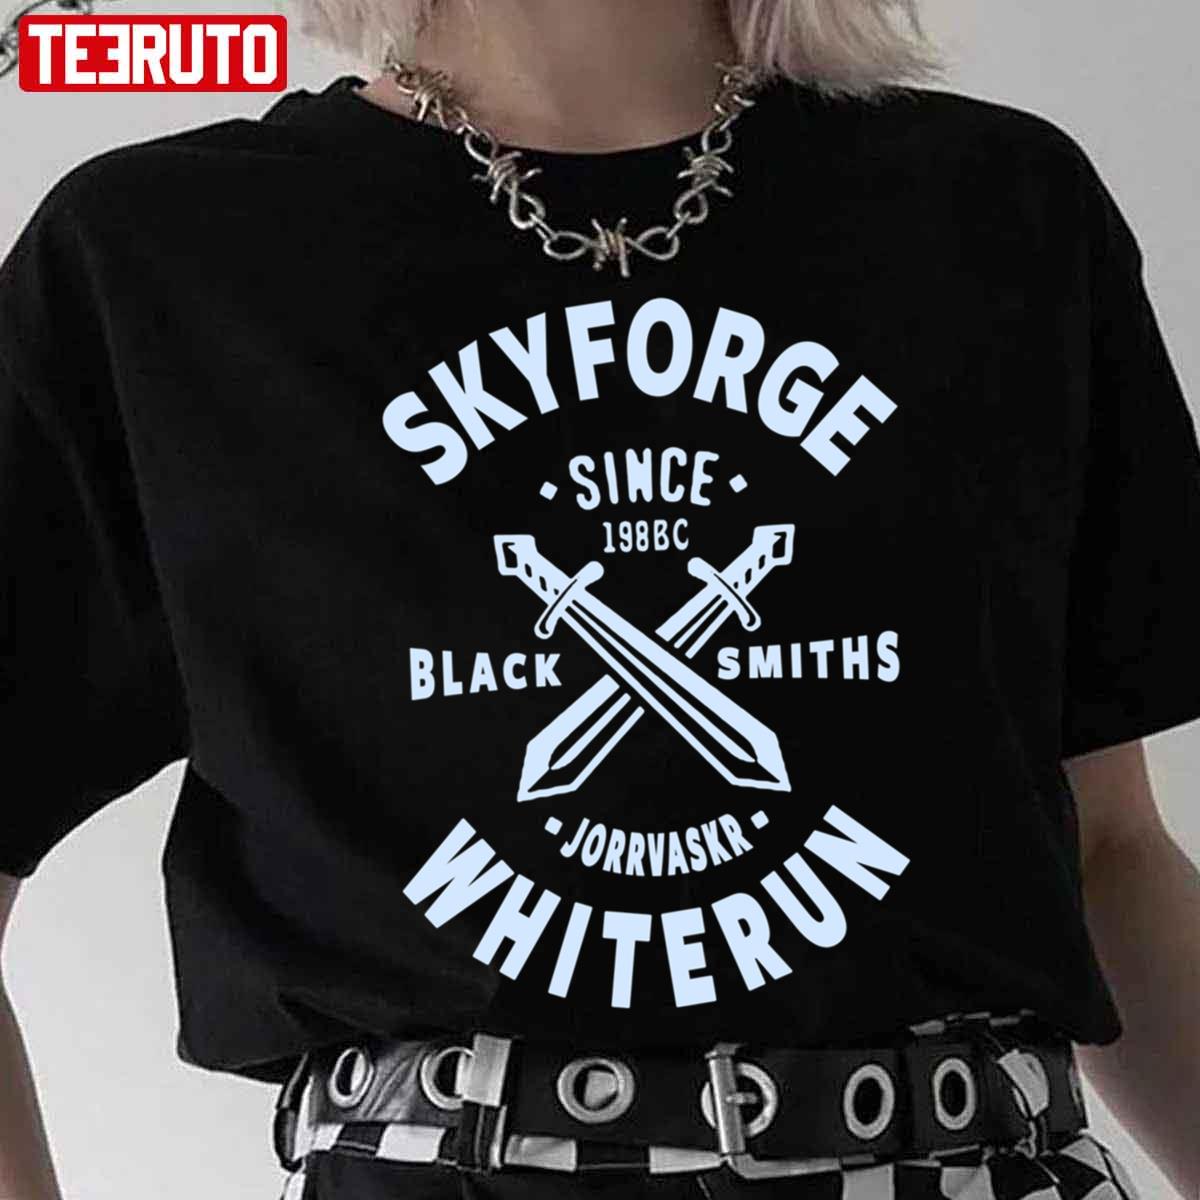 Skyforge Whiterun Unisex T-Shirt